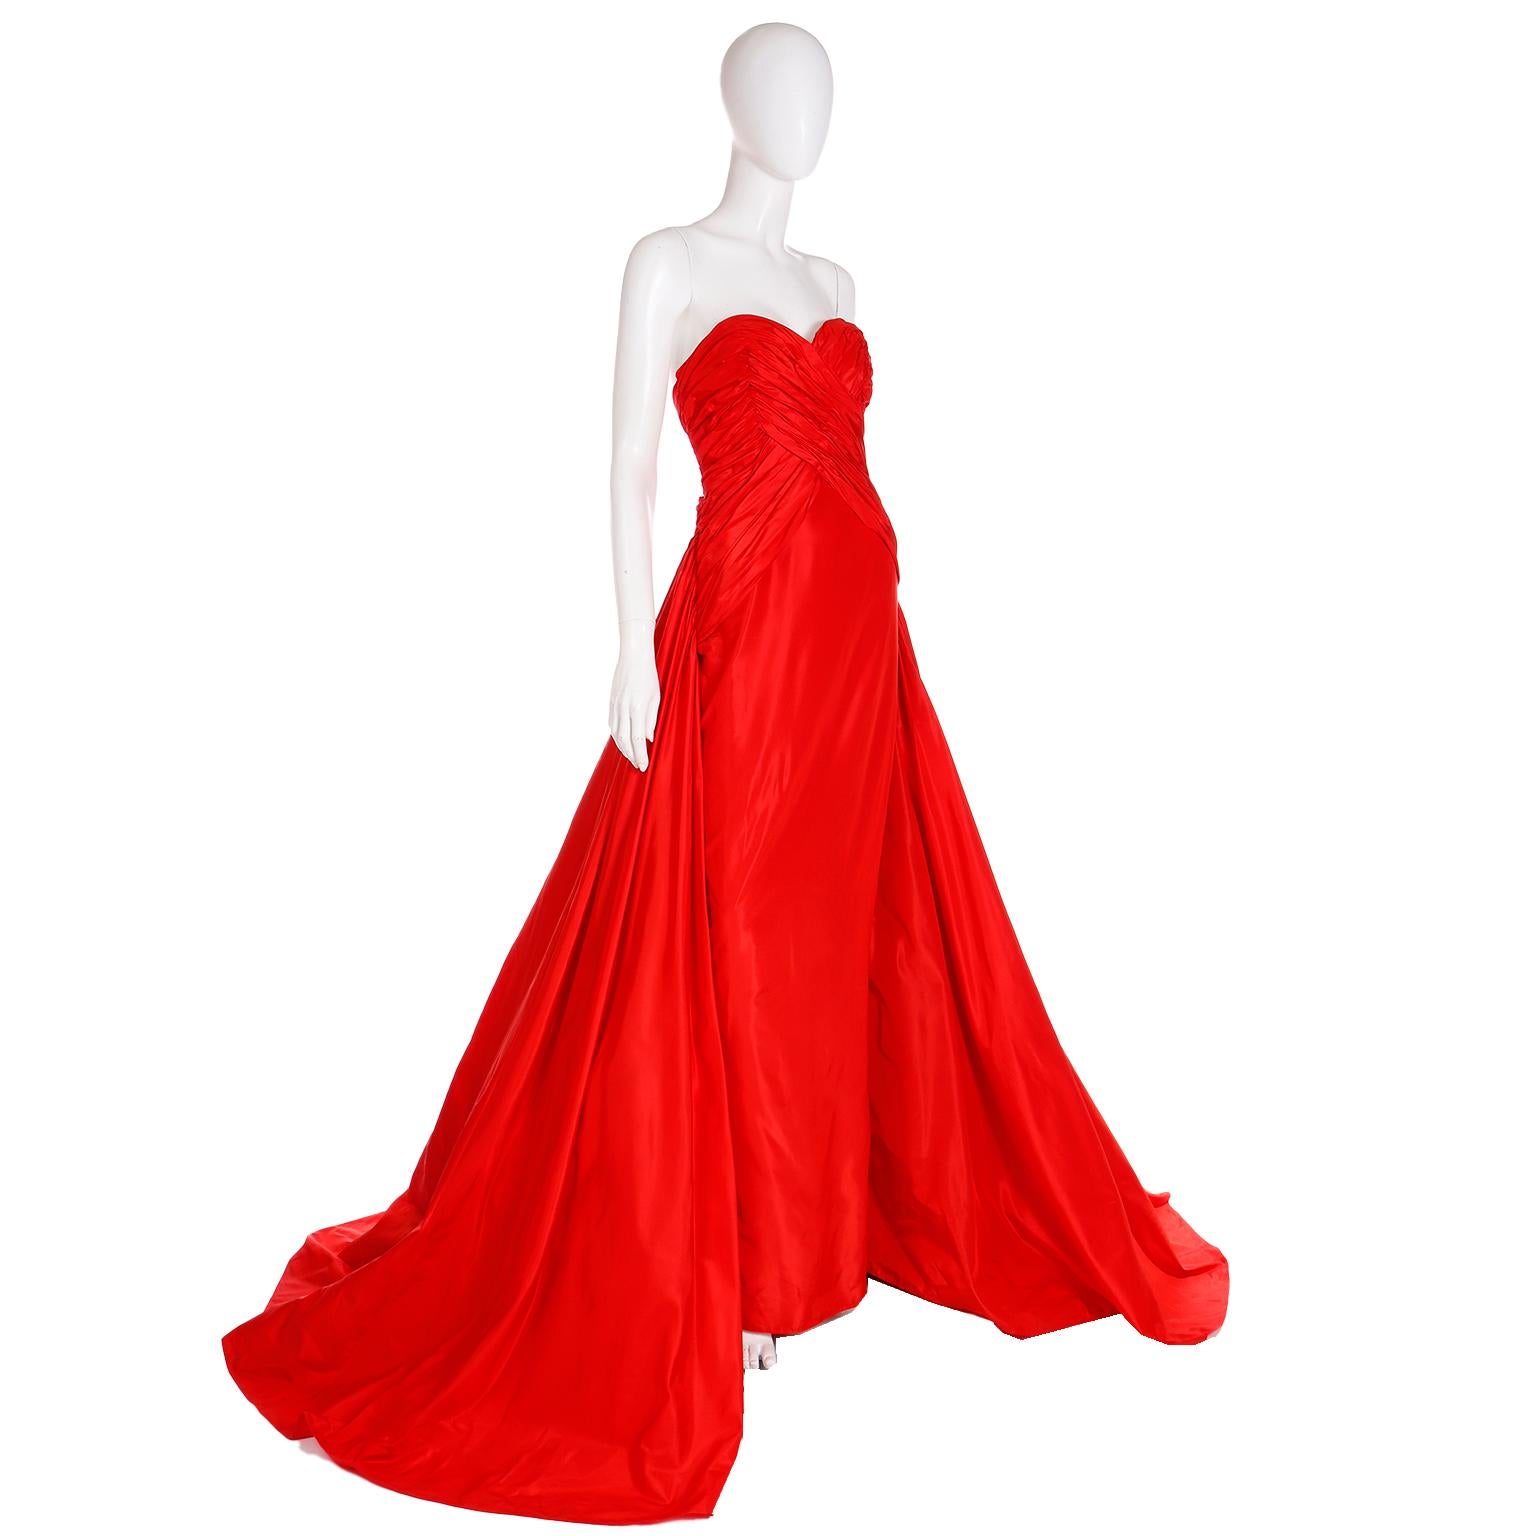 Karl Lagerfeld Fendi Red Silk Strapless Evening Dress w Train & Bolero Jacket 1